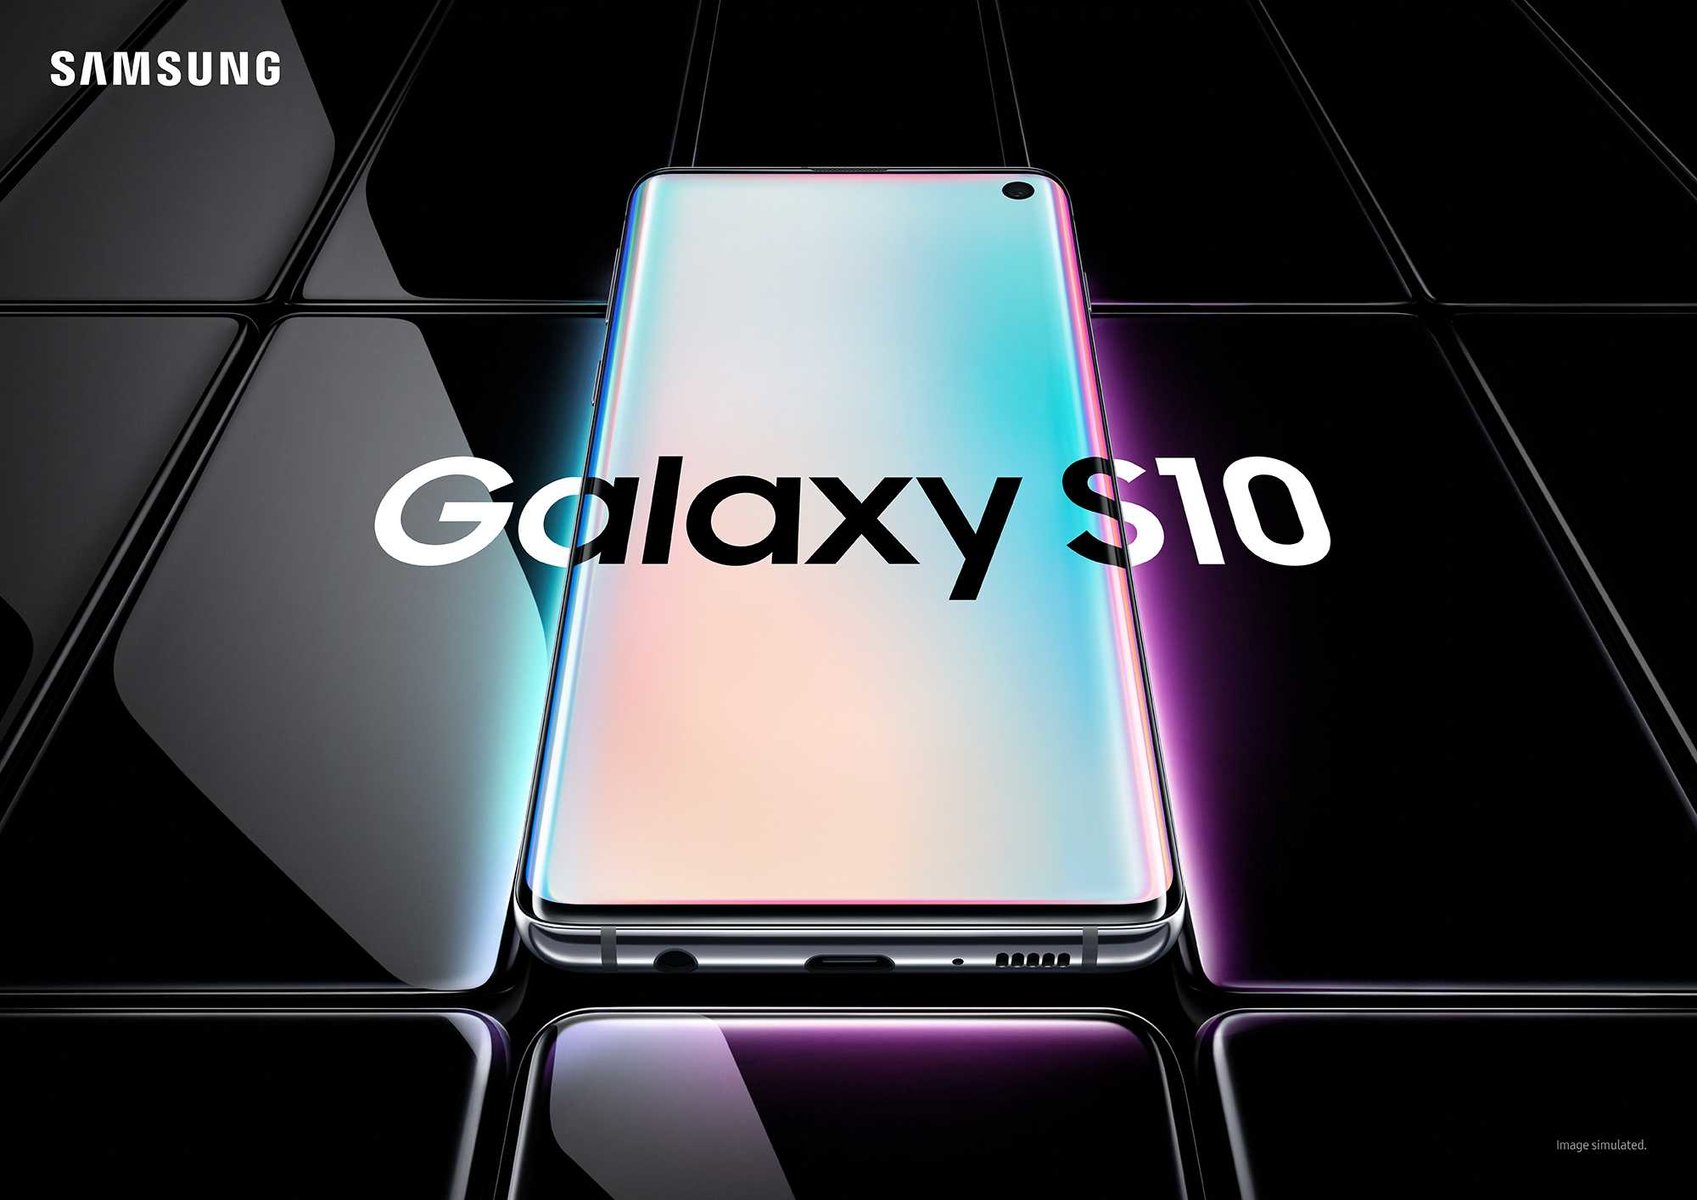 H Samsung Ανεβάζει τον Πήχη με το Galaxy S10: Περισσότερες Οθόνες, Κάμερες και Επιλογές